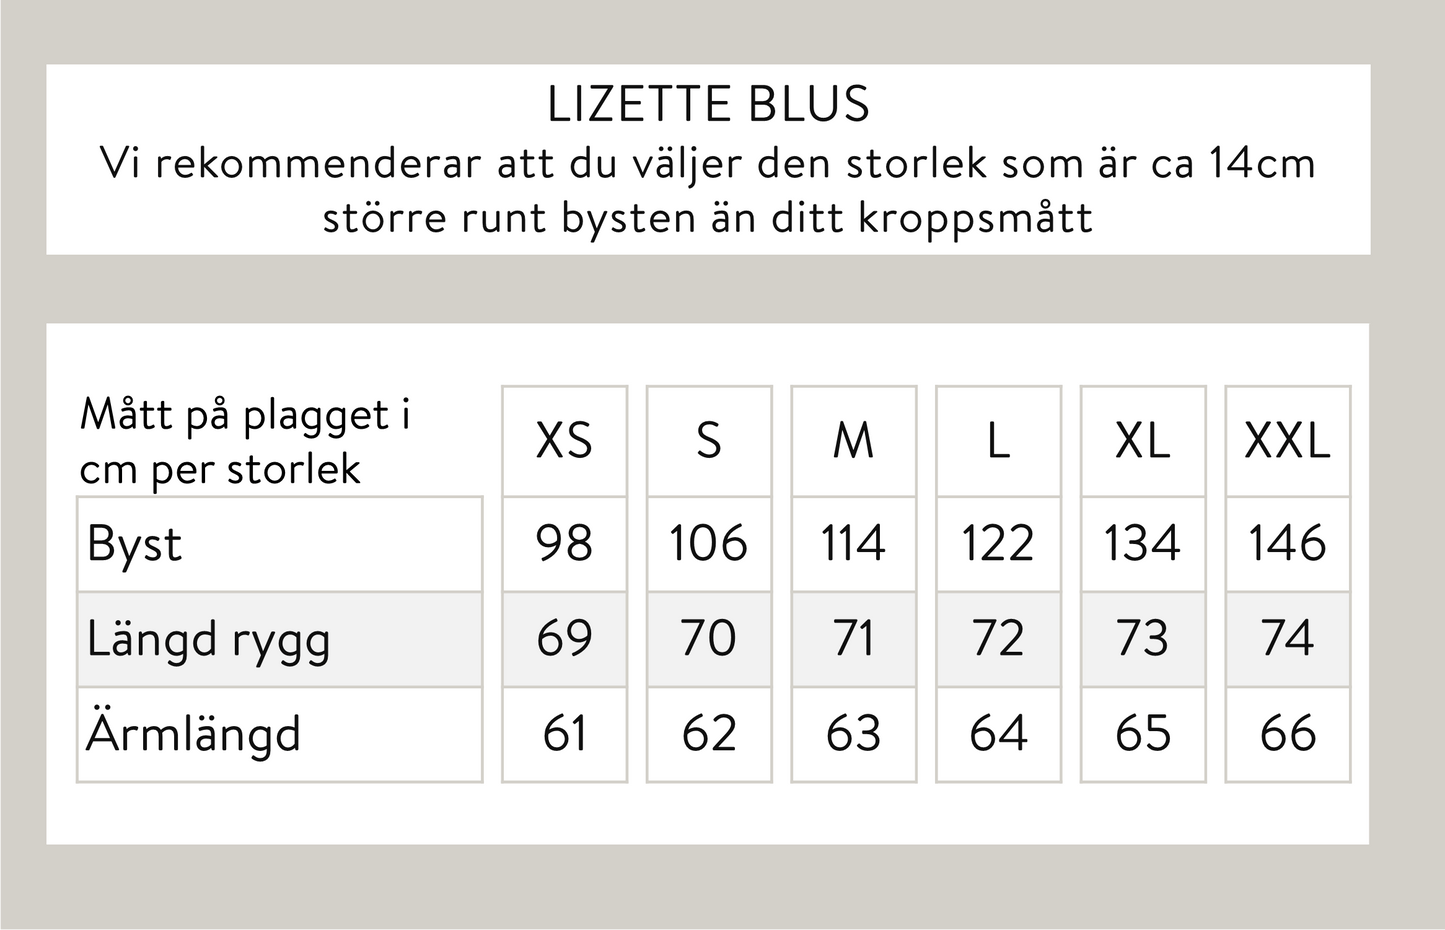 Lizette blus - Offwhite